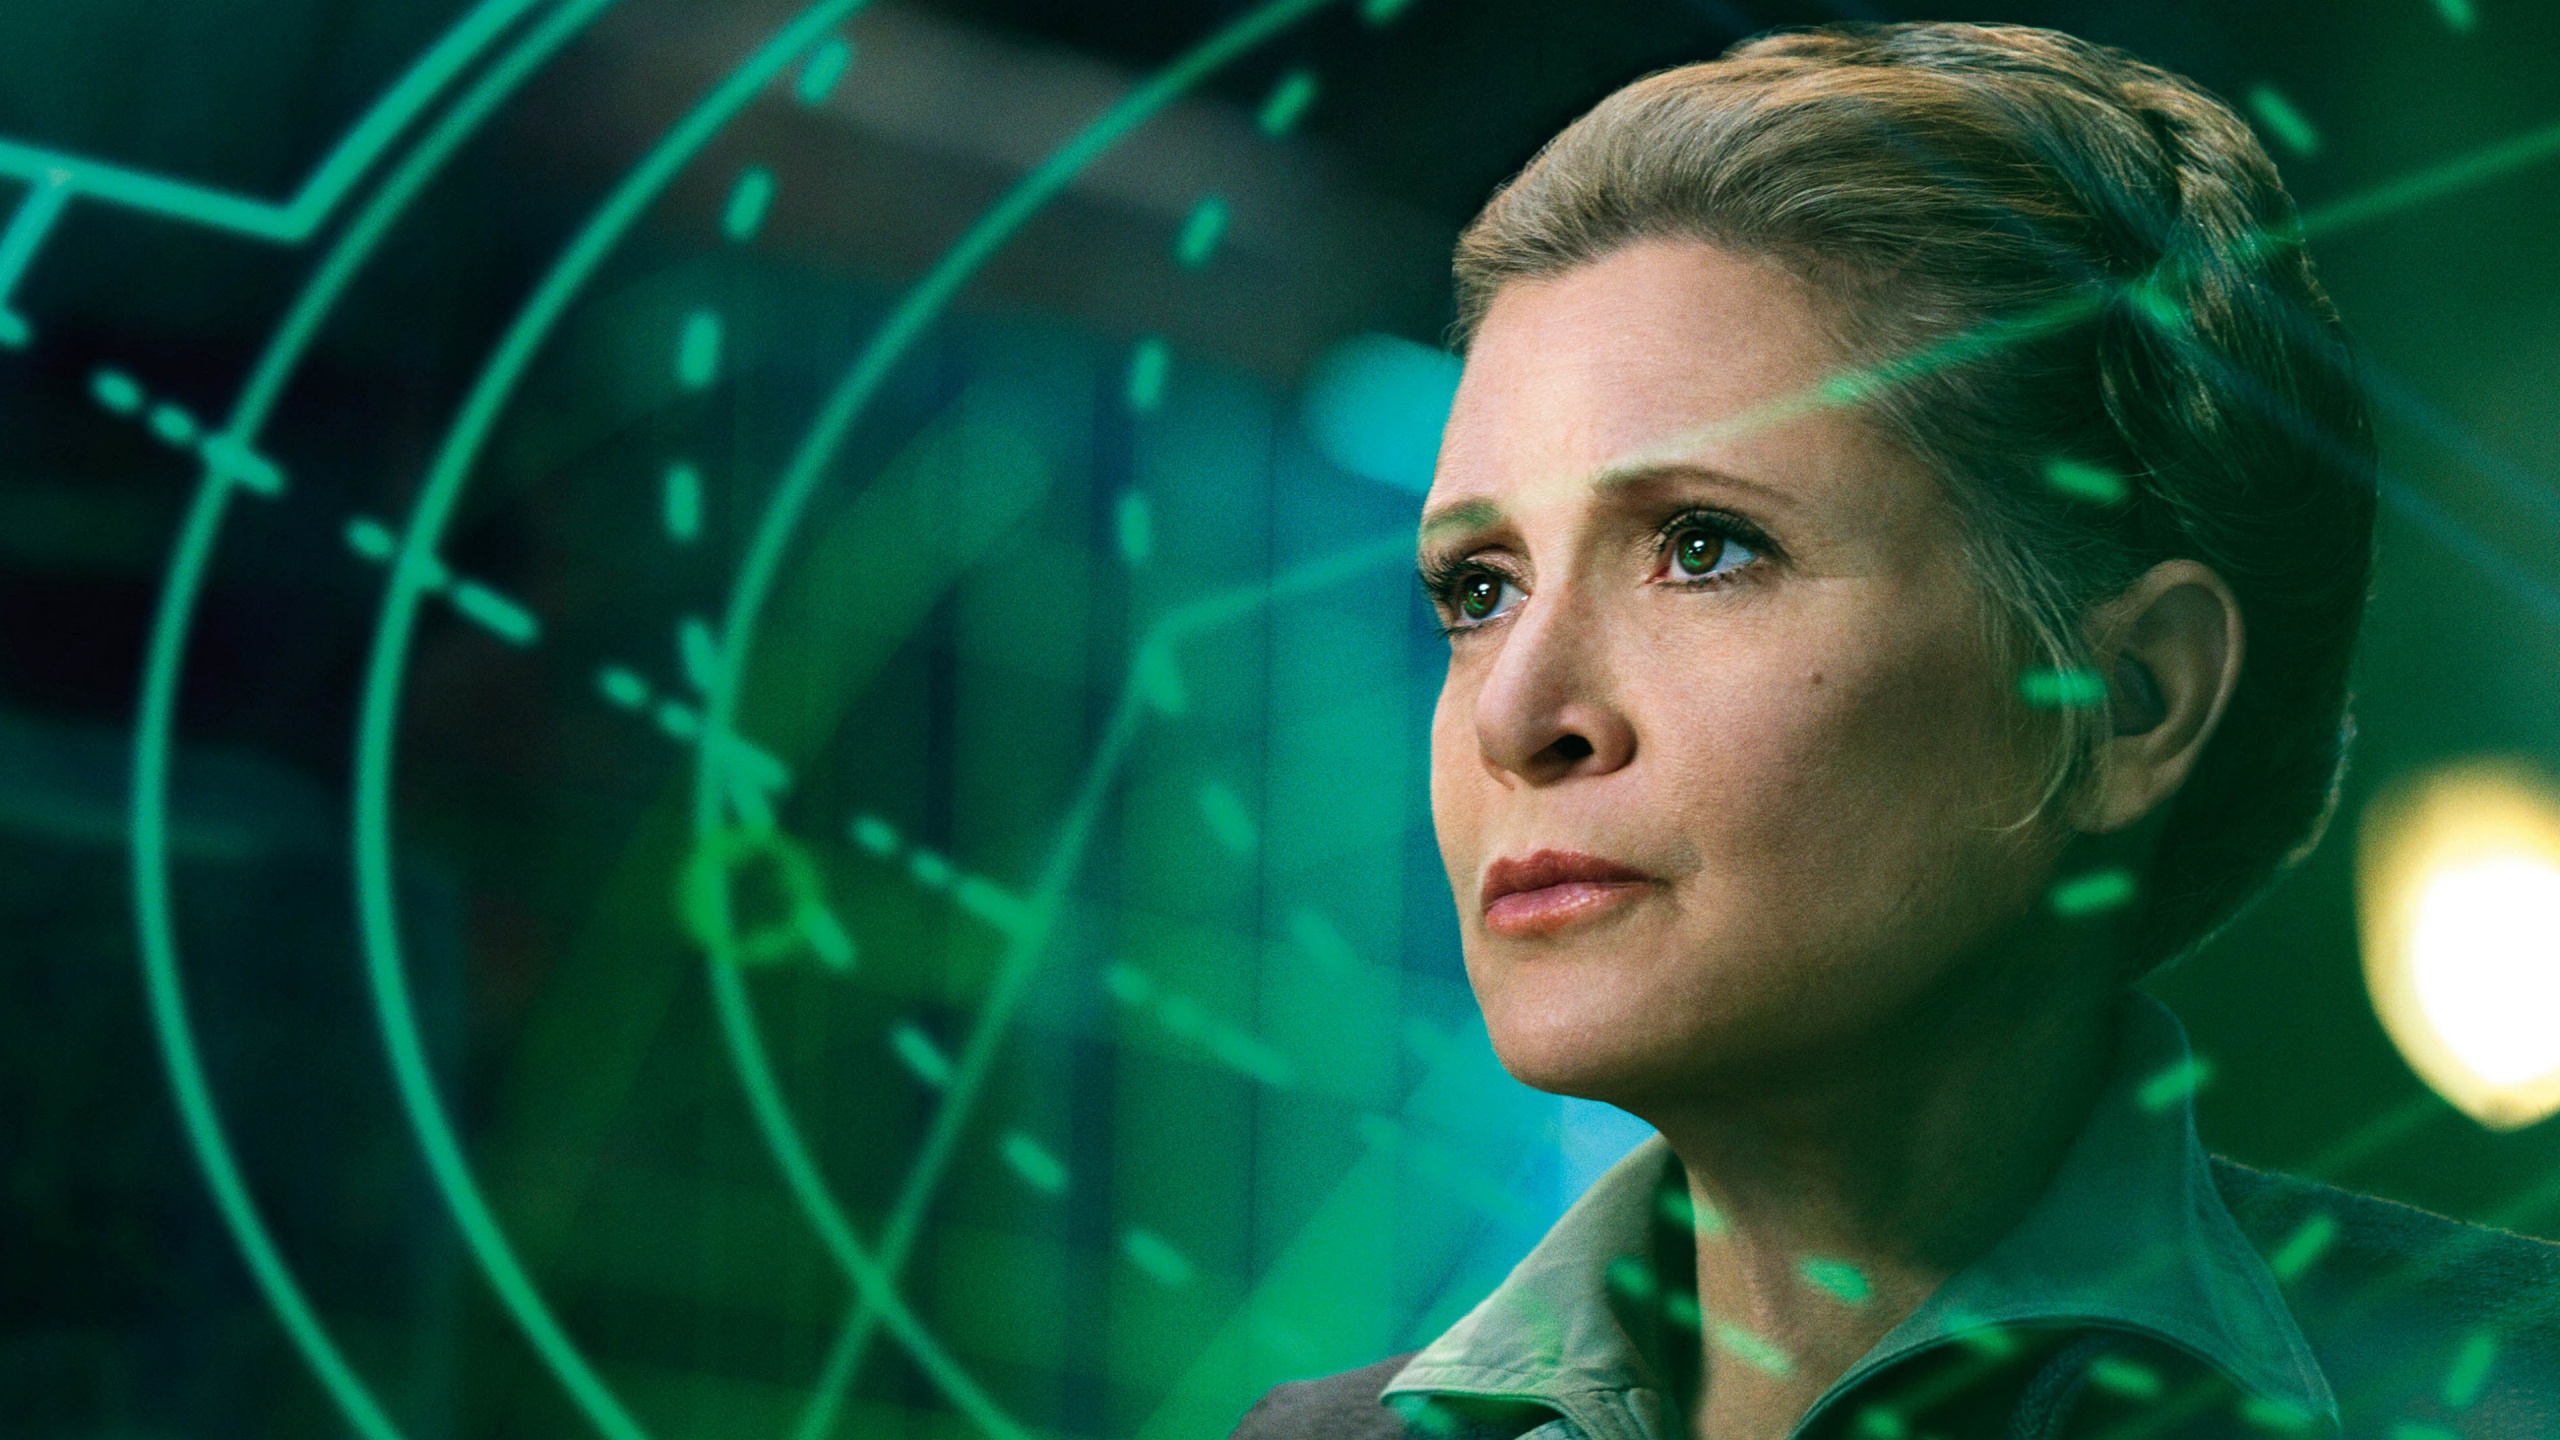 Carrie Fisher, Star Wars The Force Awakens, Luke Skywalker, Lucasfilm, Star Wars. Wallpaper in 2560x1440 Resolution